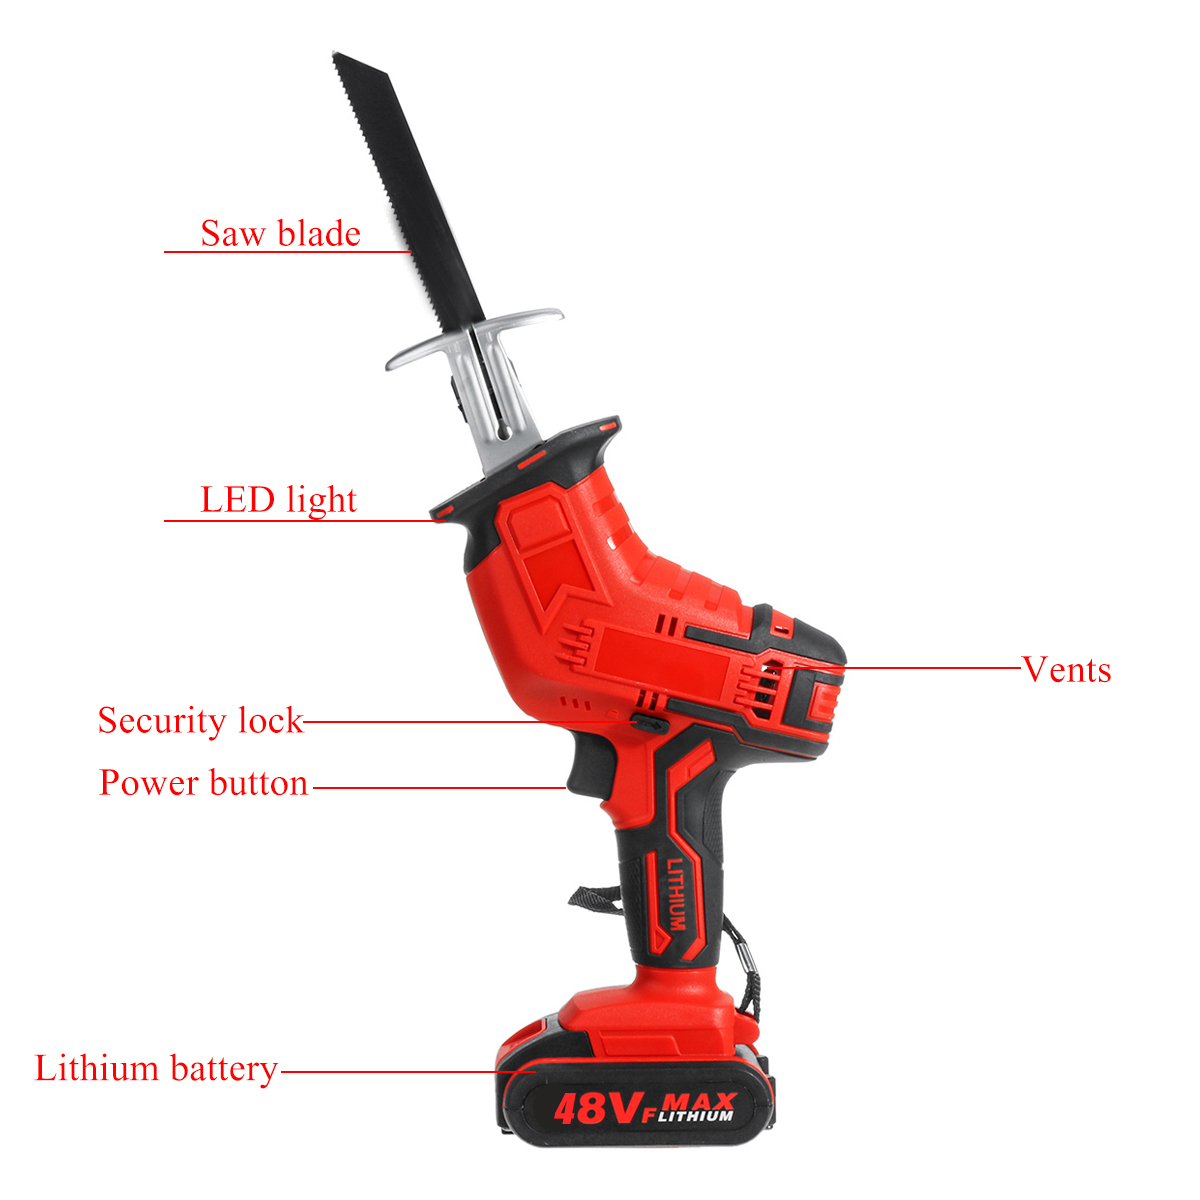 21V-Cordless-Reciprocating-Saw-Electric-Saw-W-4-Saw-Blades-Metal-Cutting-Woodworking-W-12-Lithium-Ba-1671503-9